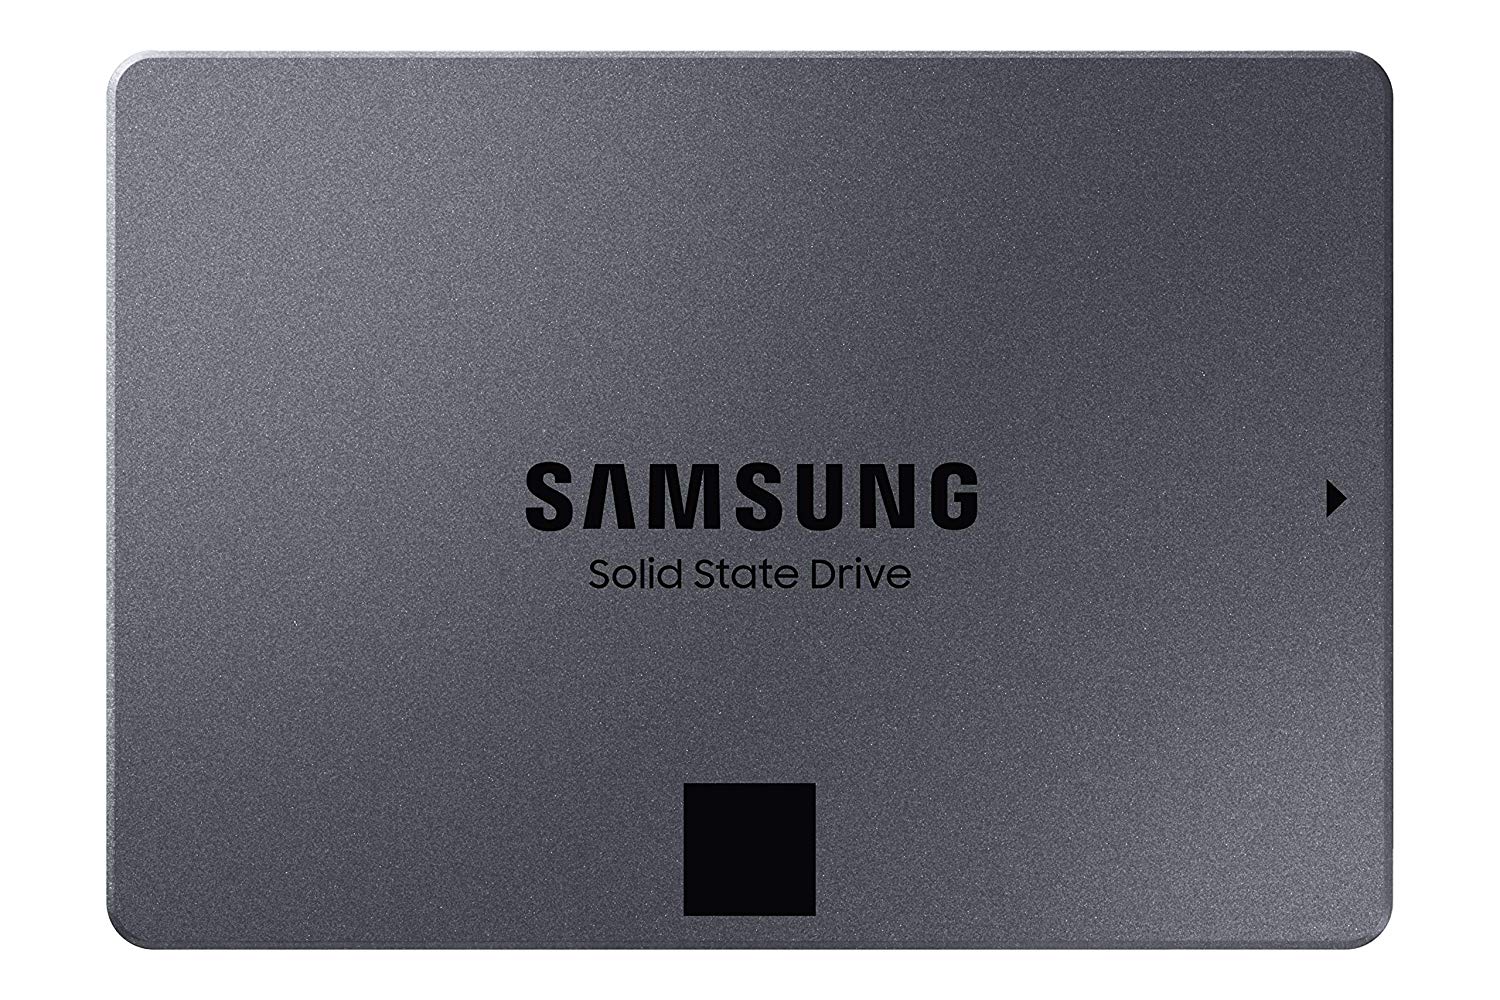 Samsung 860 QVO 2TB 2.5 Inch SATA III Internal SSD (MZ-76Q2T0B/AM), Gray.